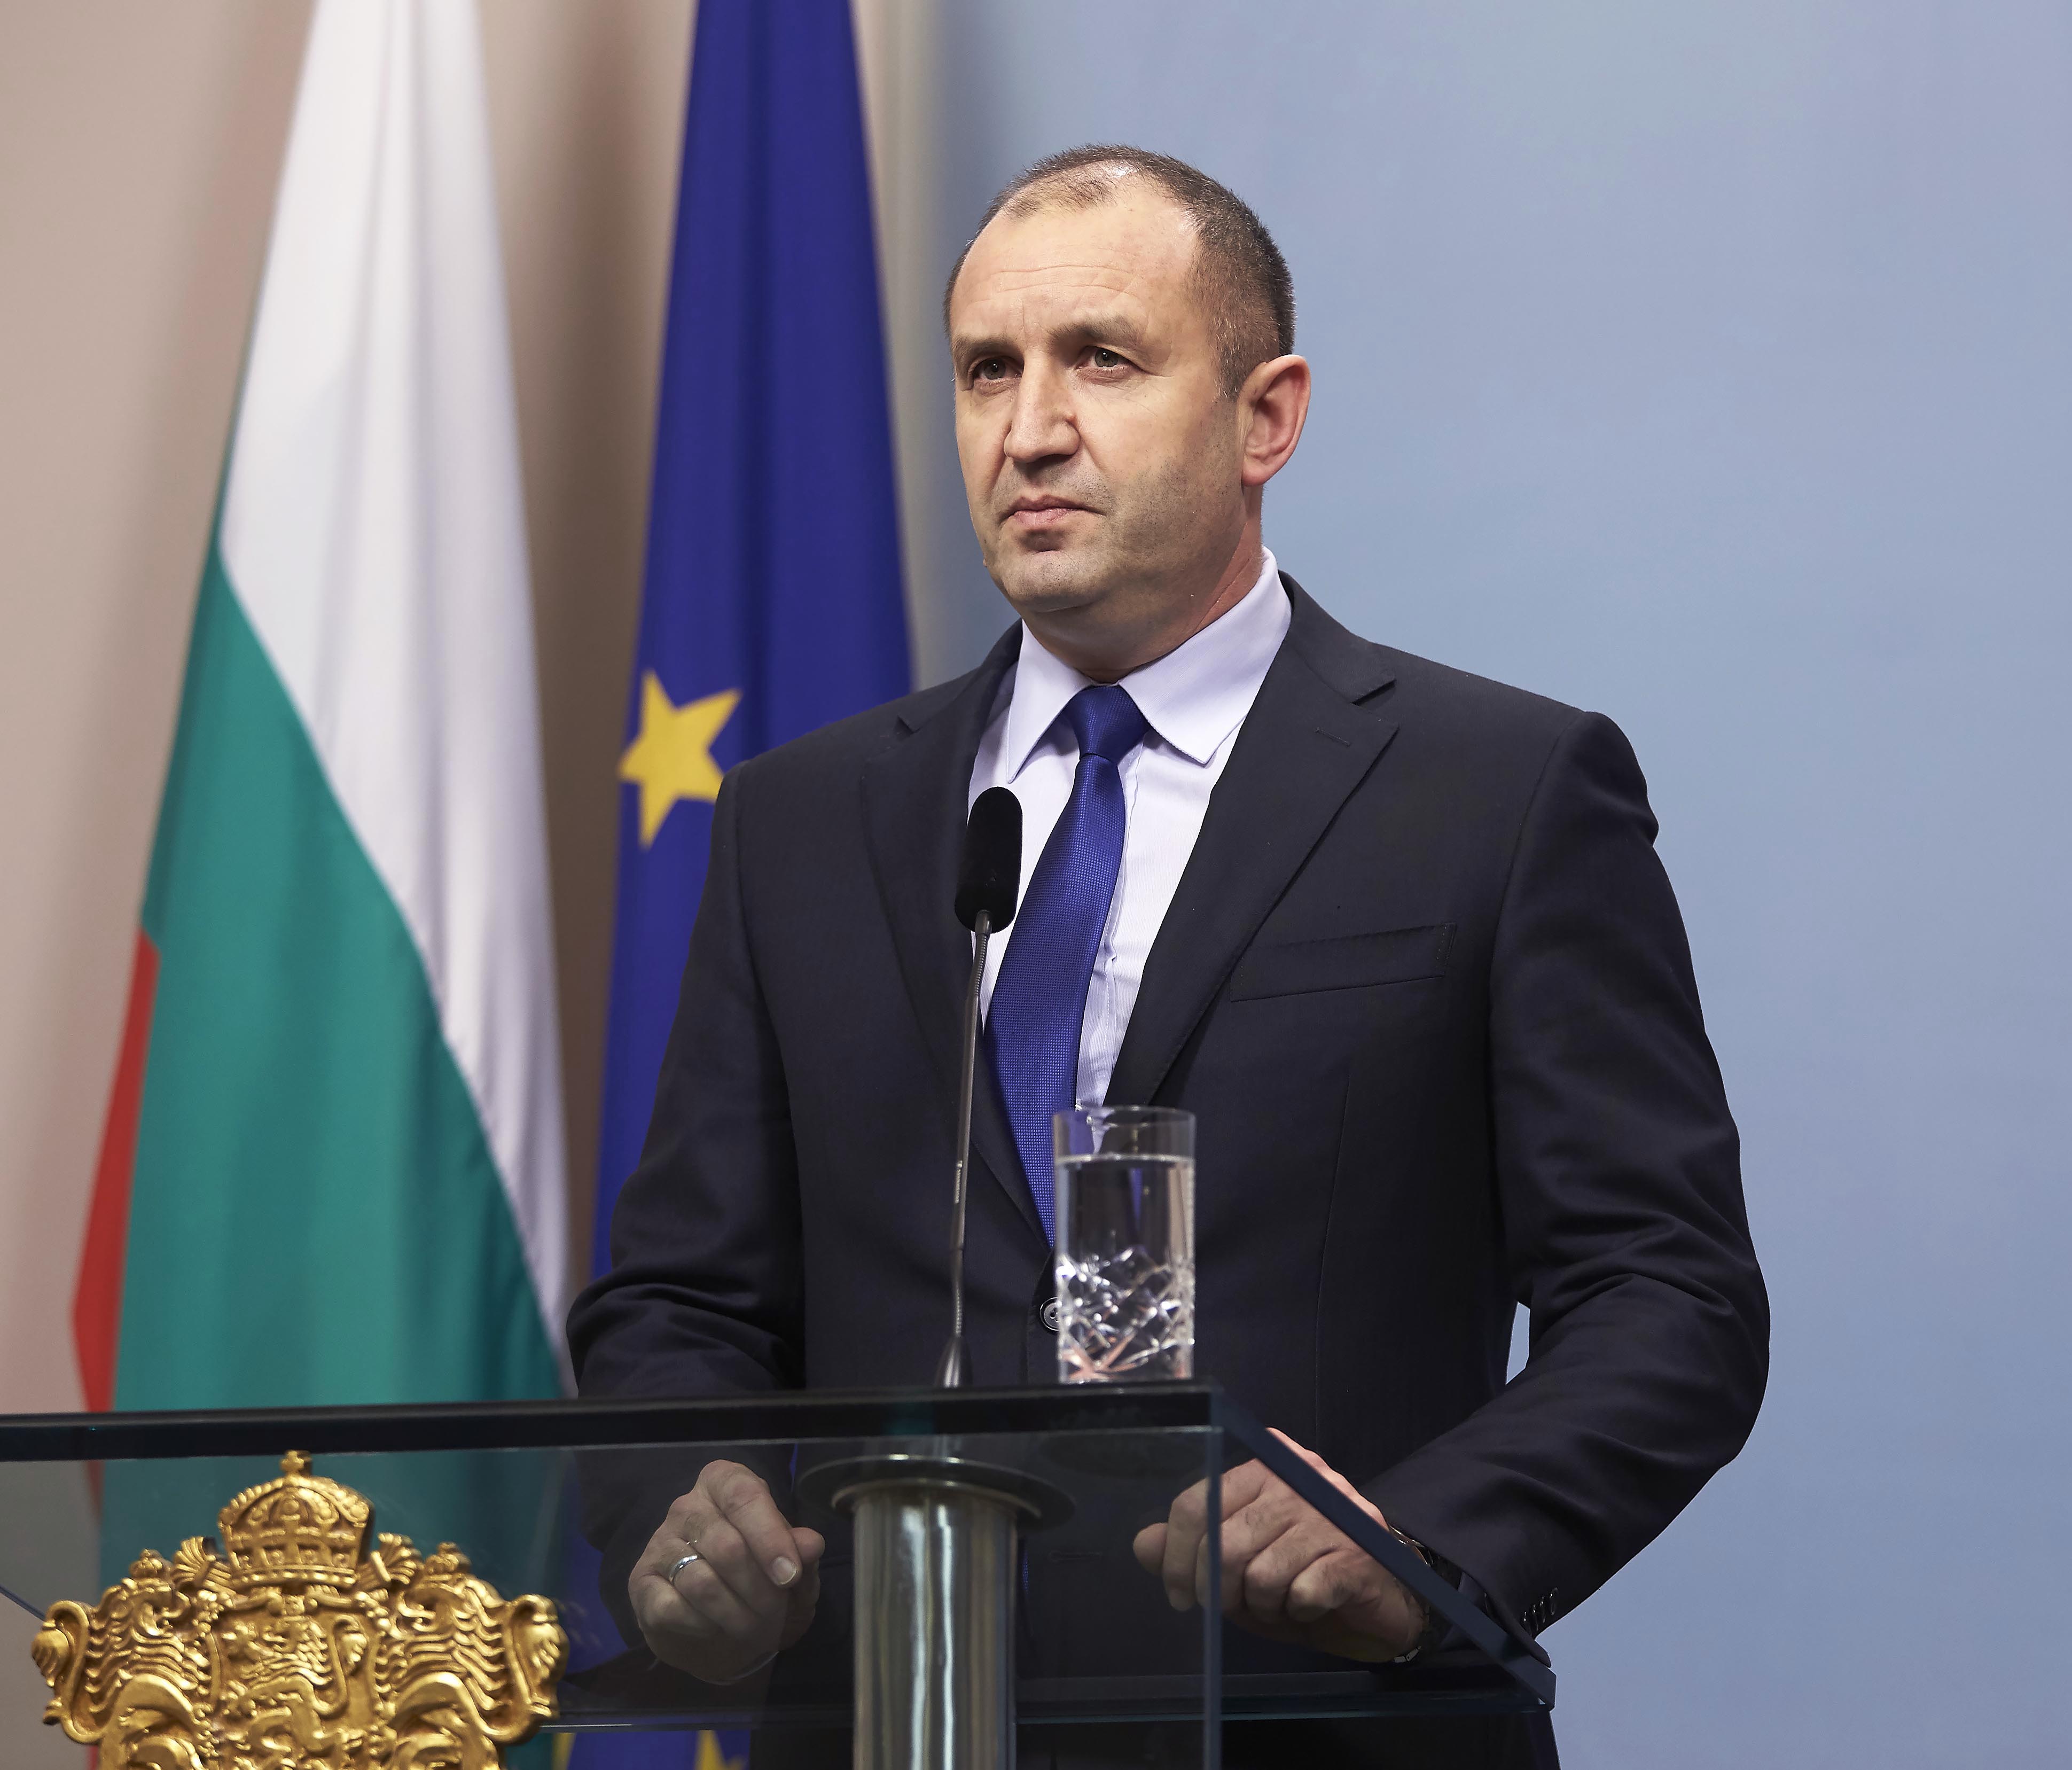 President Radev Urged Parliament To Update Budget